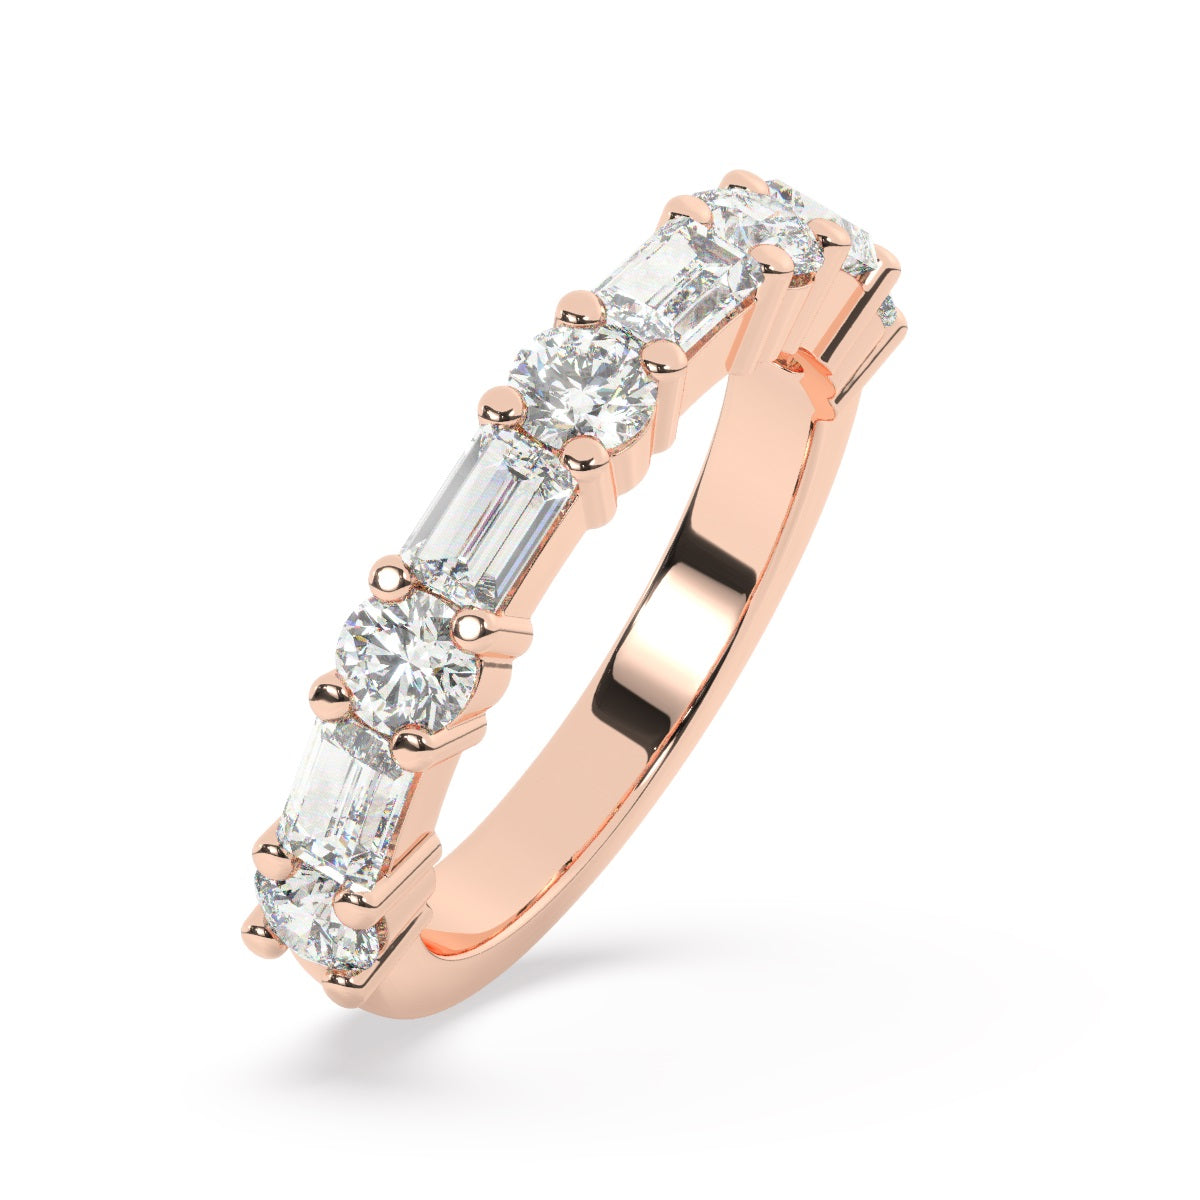 18K Gold Diamond Round Cut Wedding Ring 1.43c